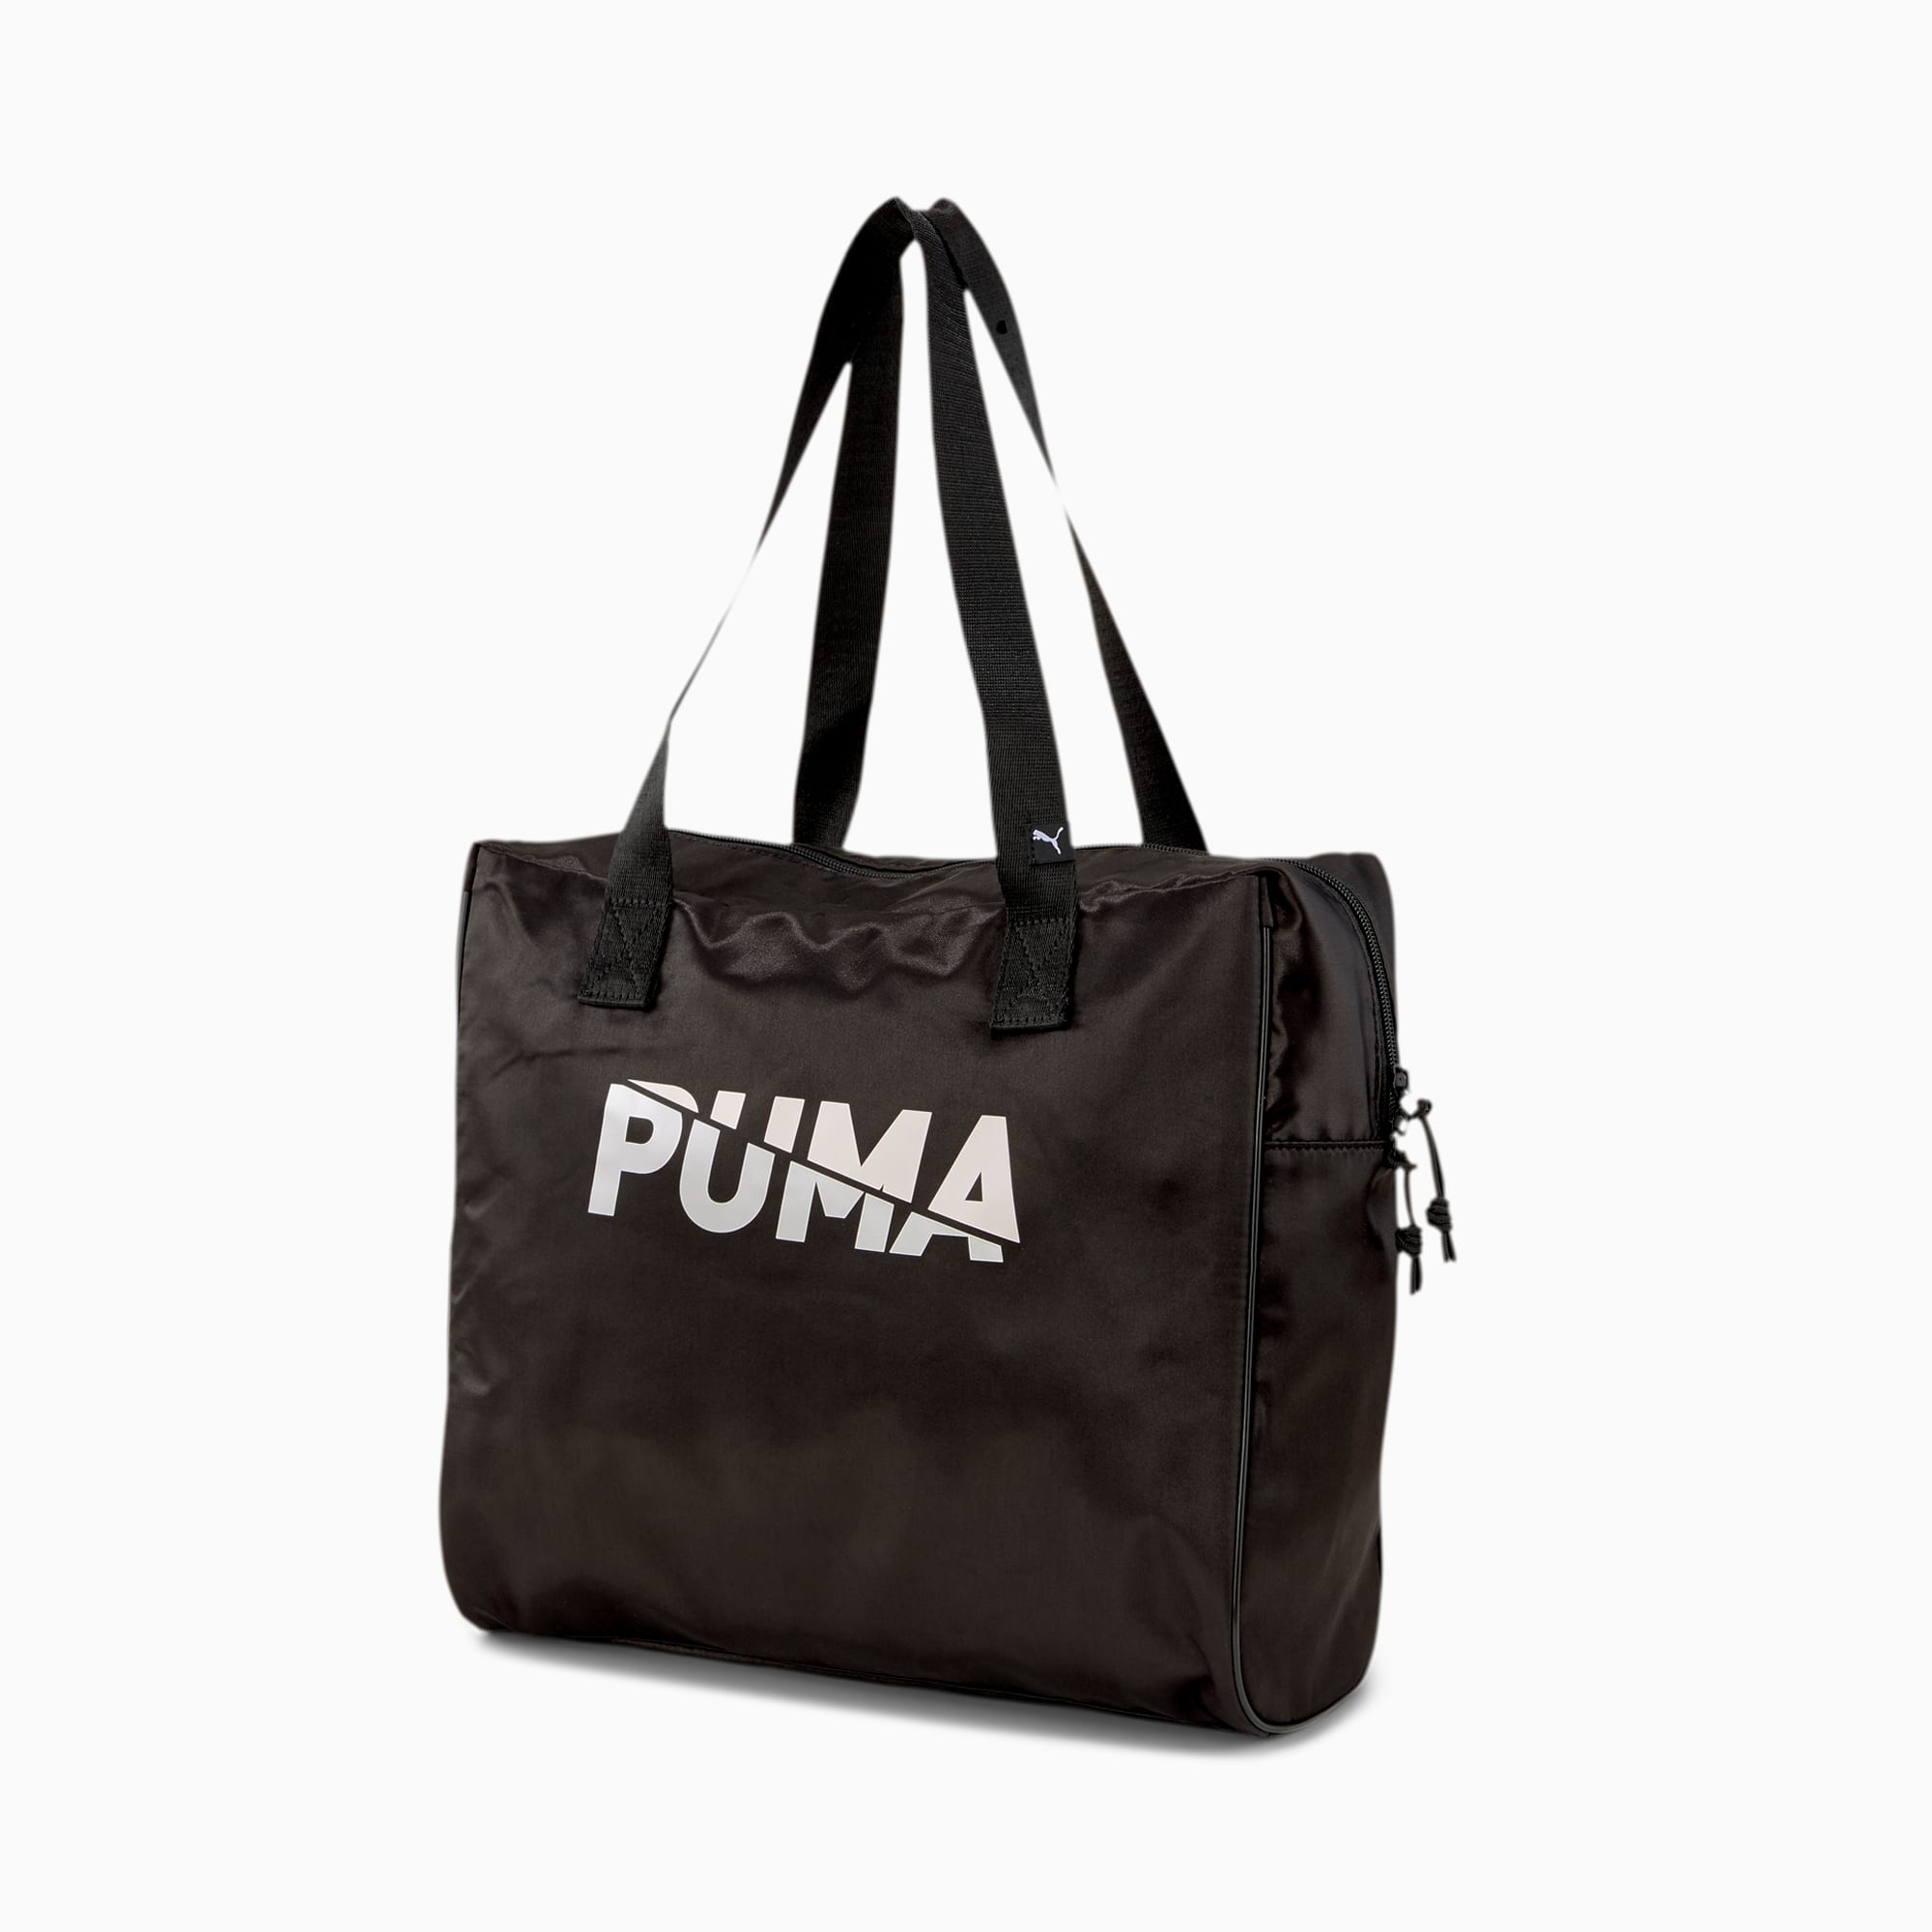 puma black handbag